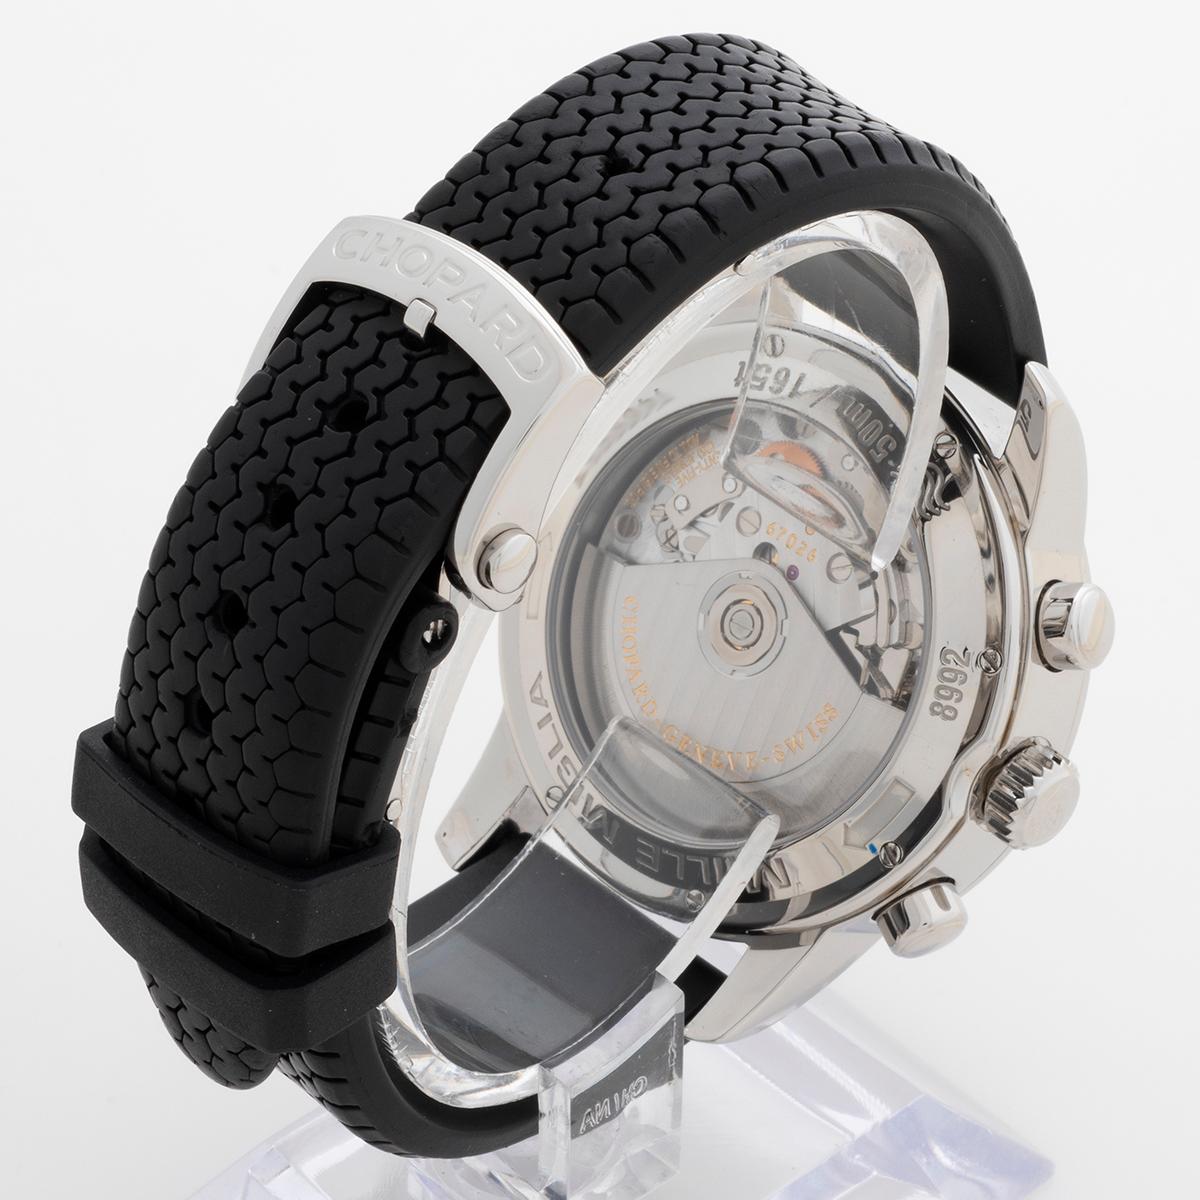 Women's or Men's Chopard Mille Miglia Wristwatch Ref 168992, Chronograph/Date/GMT. Year 2010